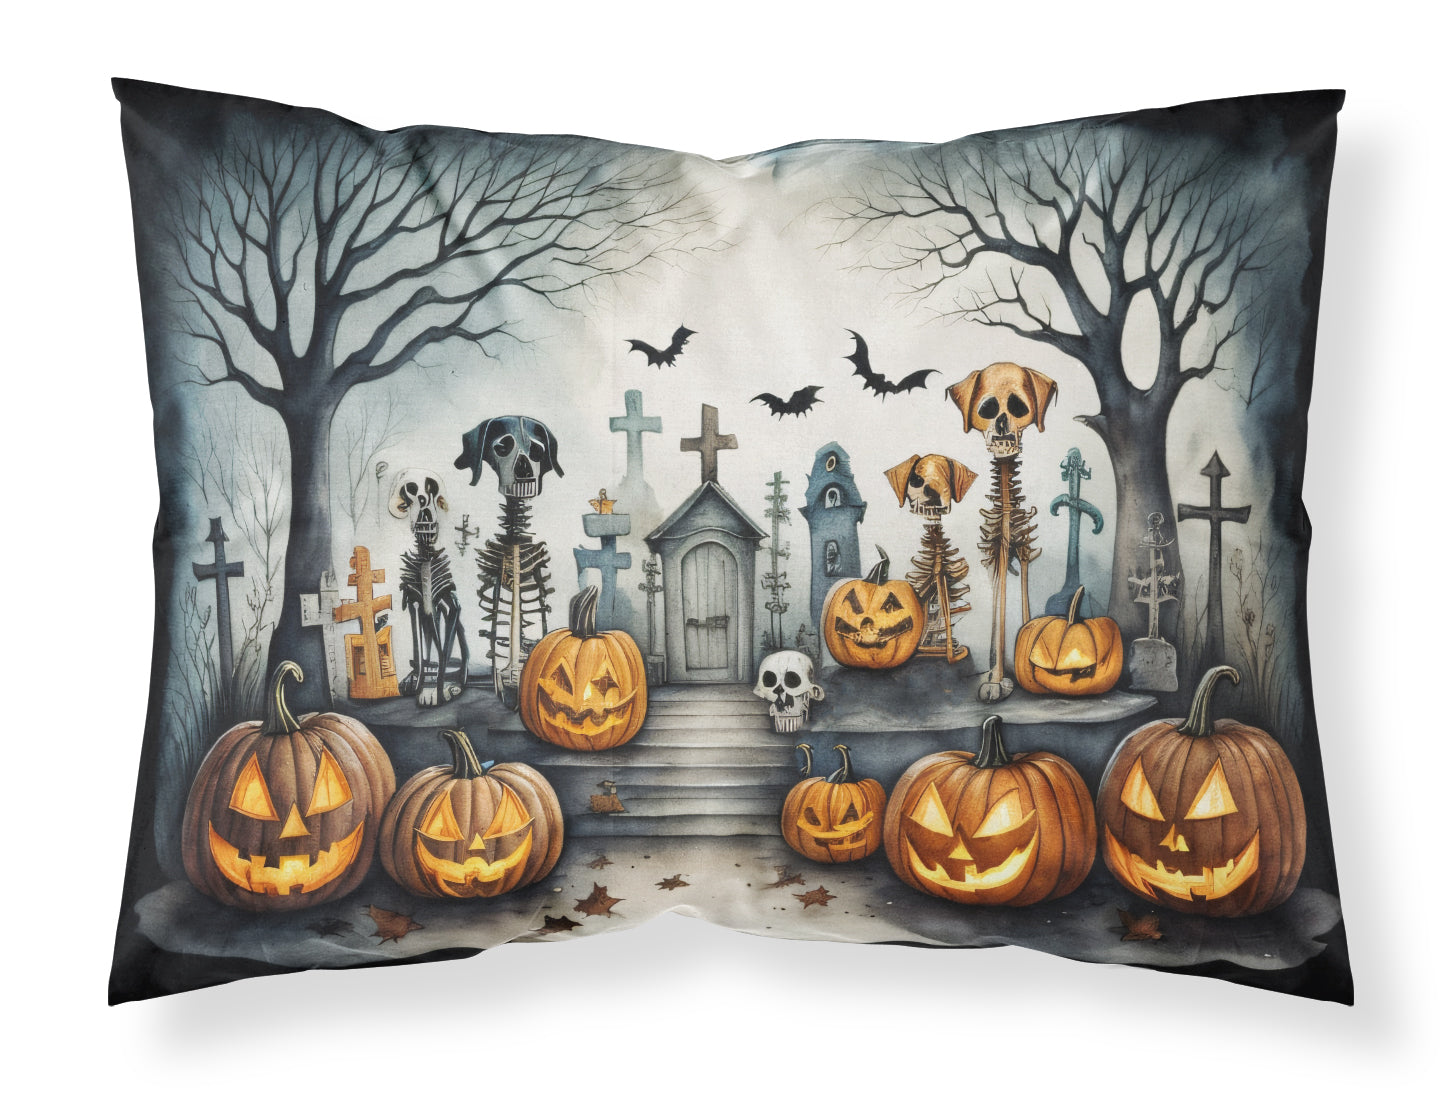 Buy this Pet Cemetery Spooky Halloween Fabric Standard Pillowcase